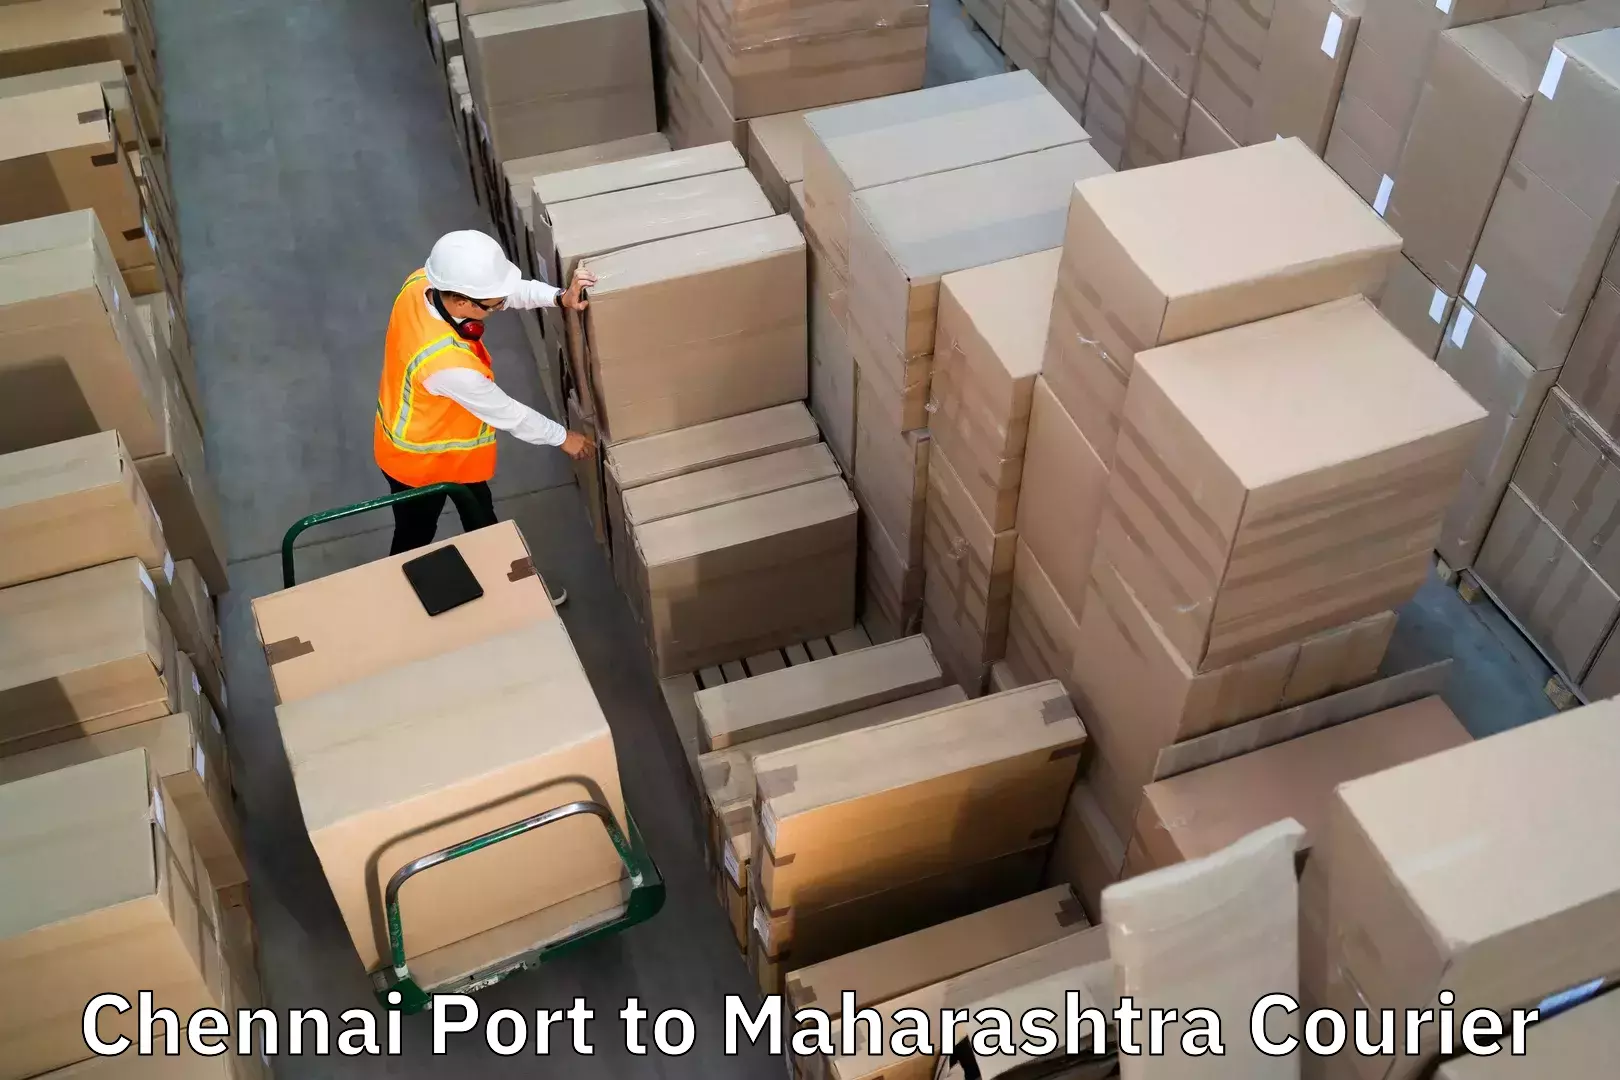 Doorstep luggage collection Chennai Port to Loha Nanded